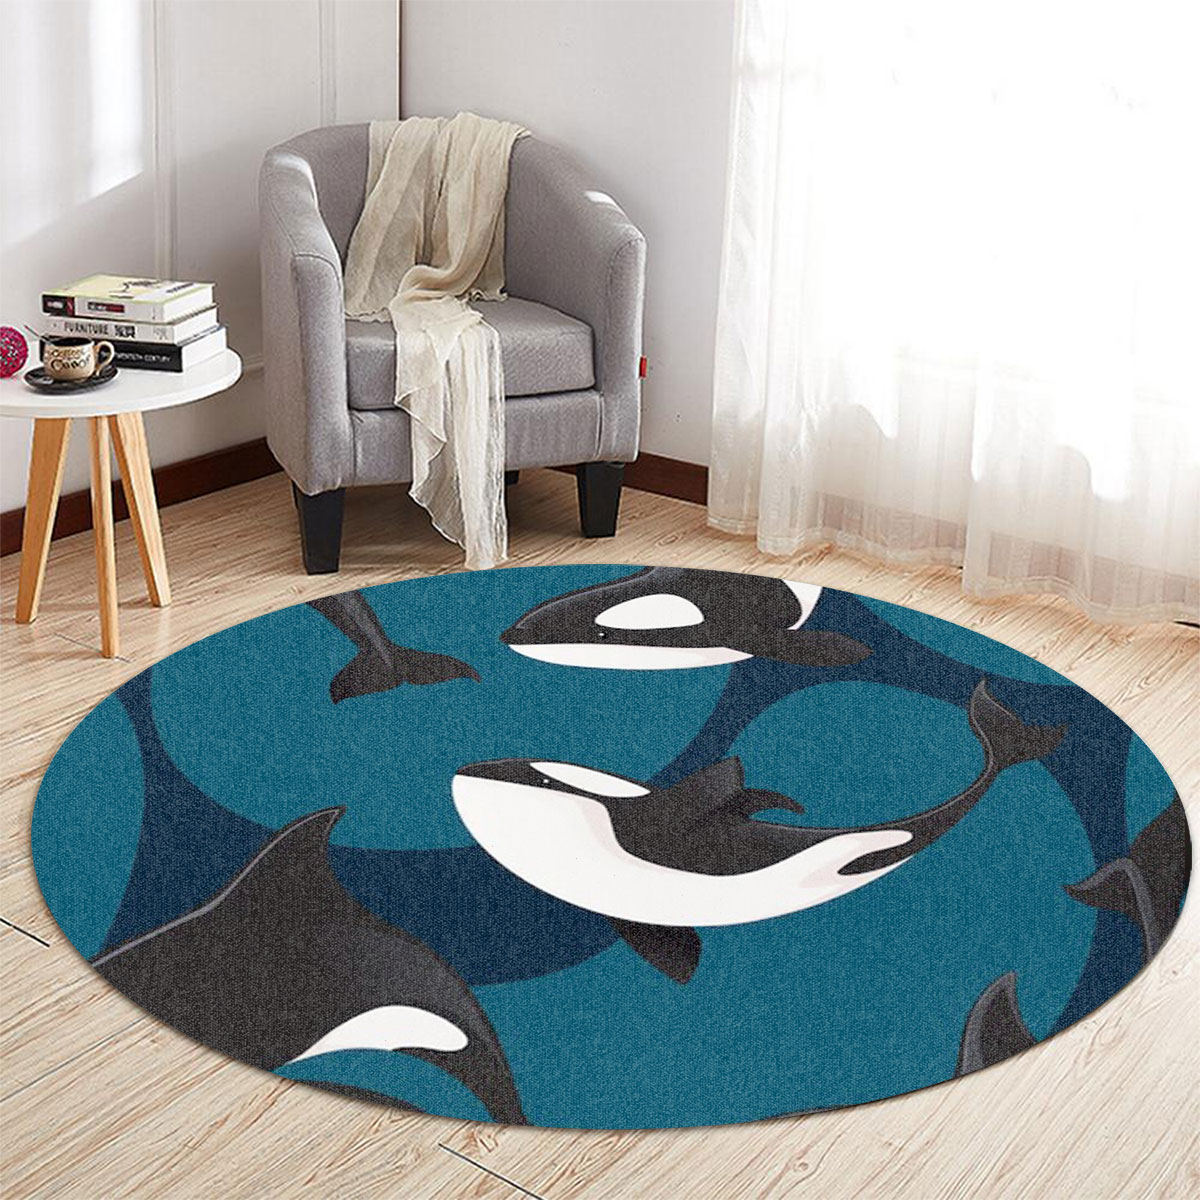 Deap Ocean Orca Round Carpet